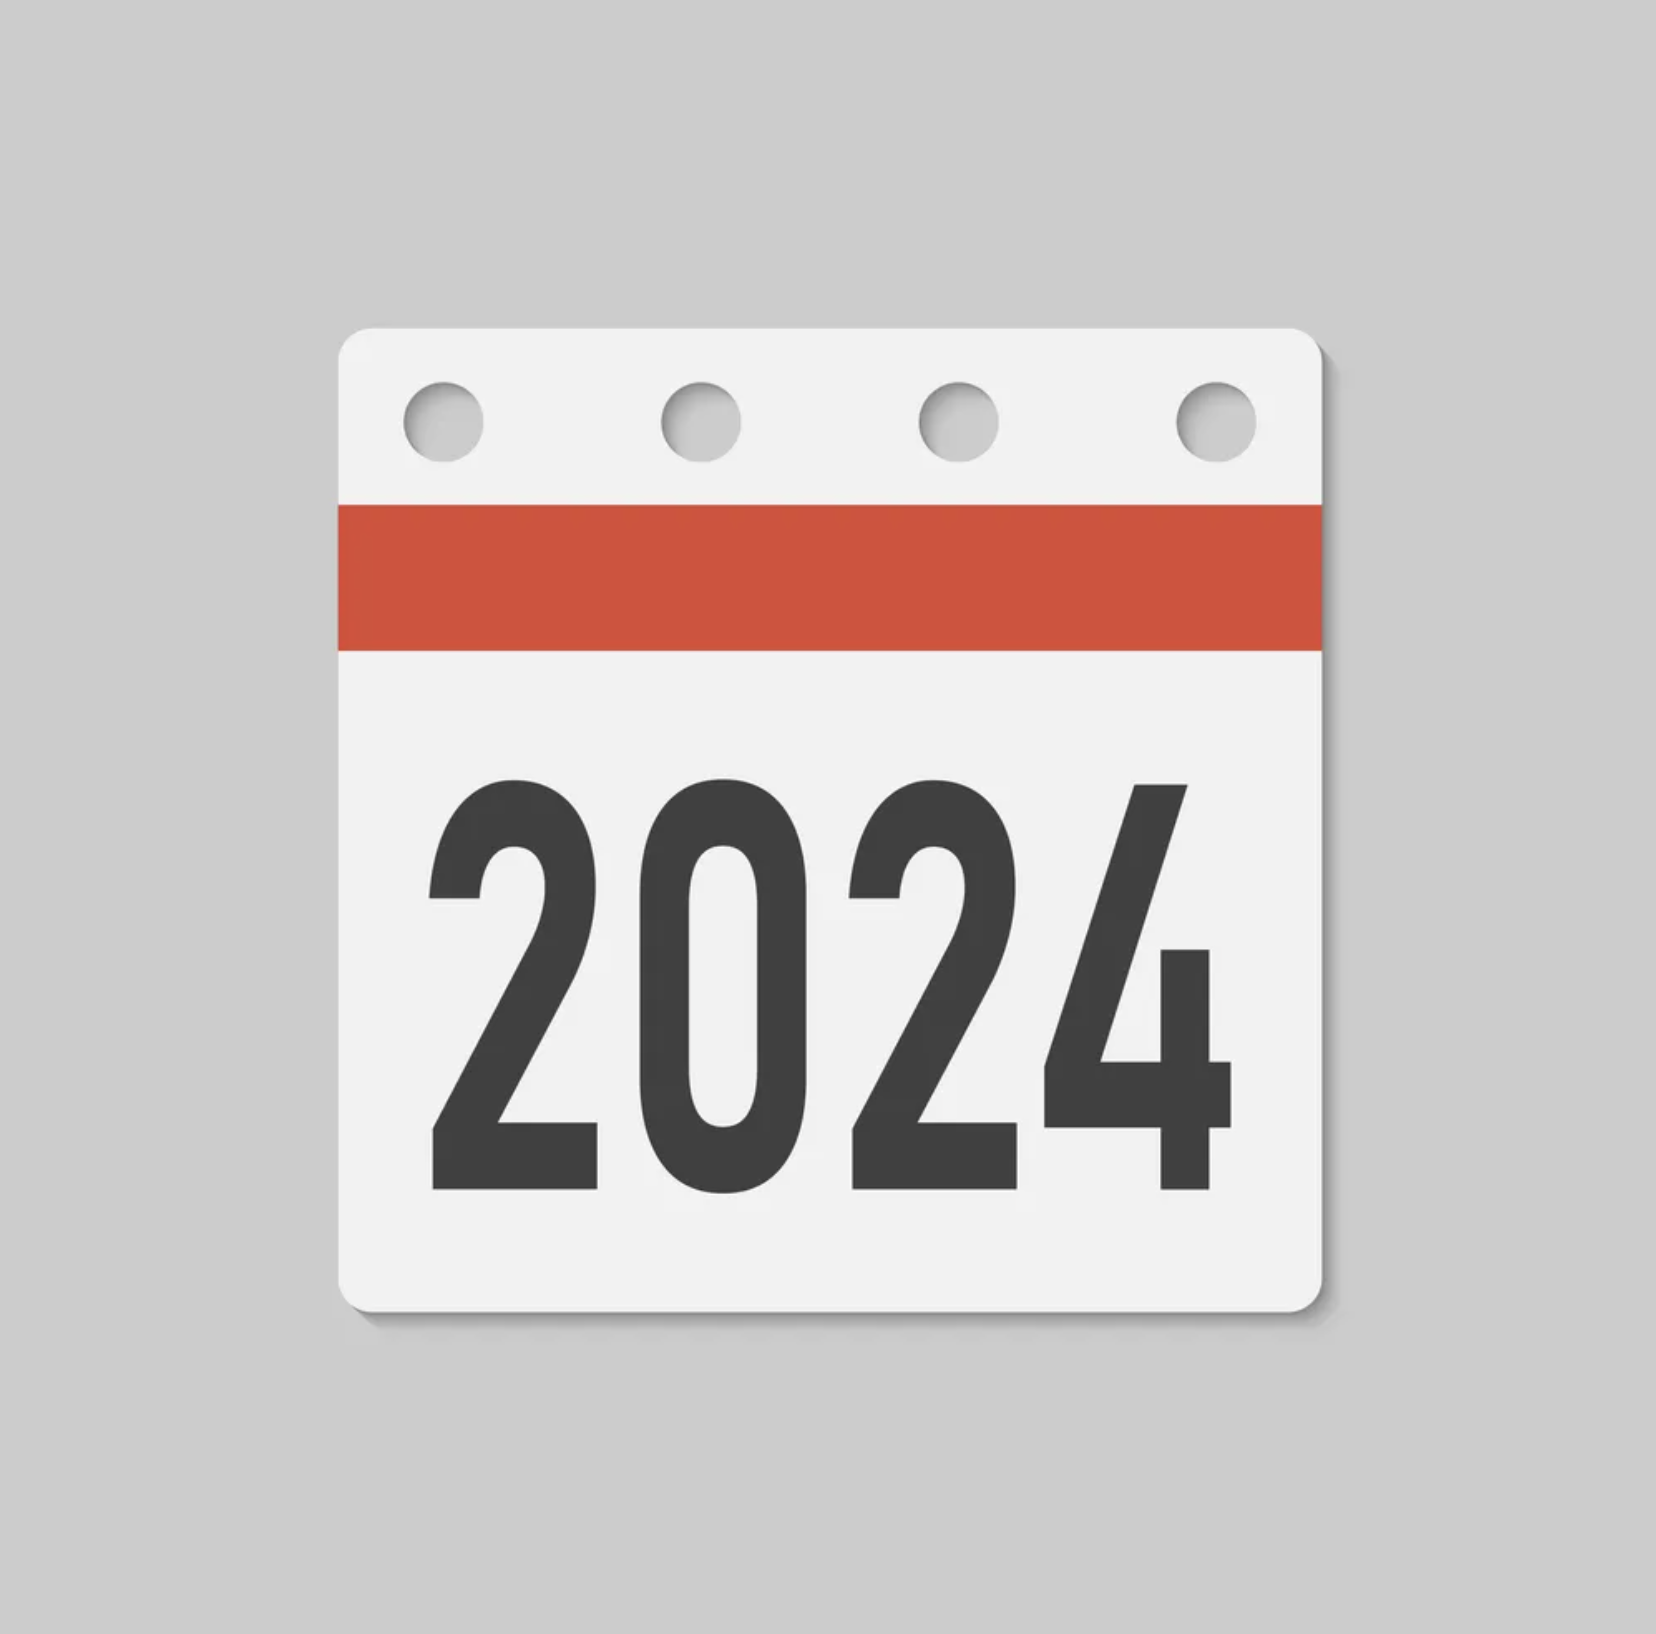 Calendar with 2024 written on it